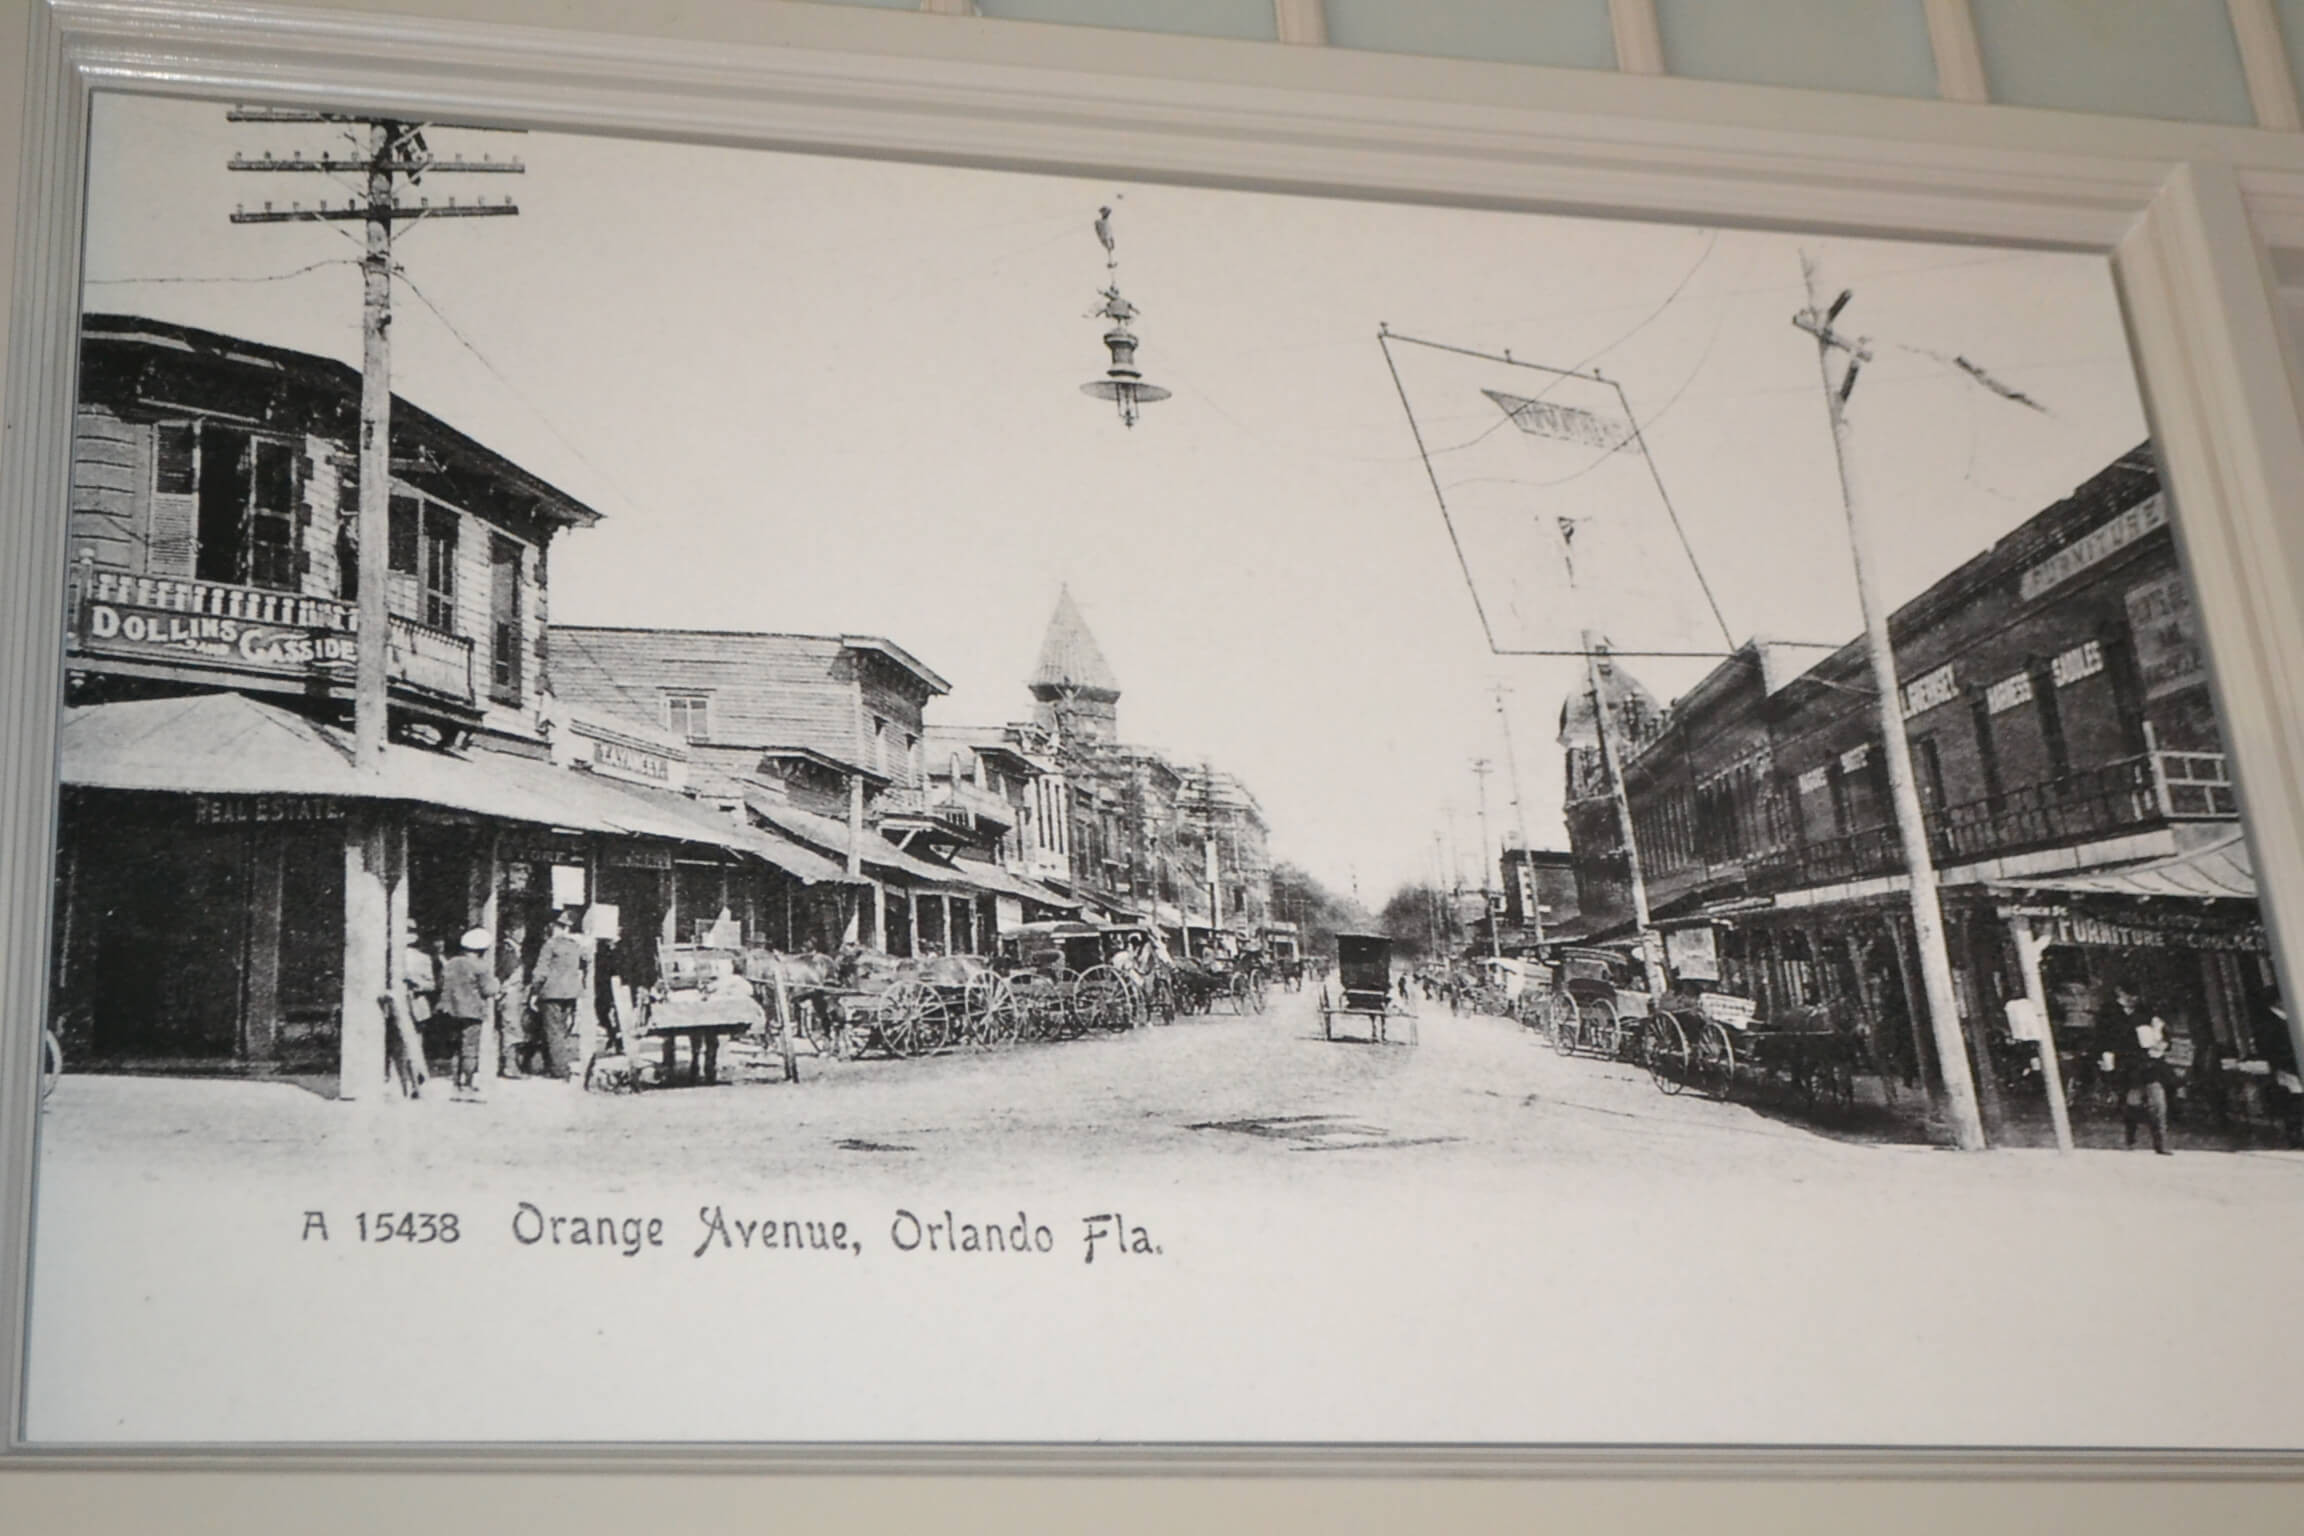 The History of Orlando